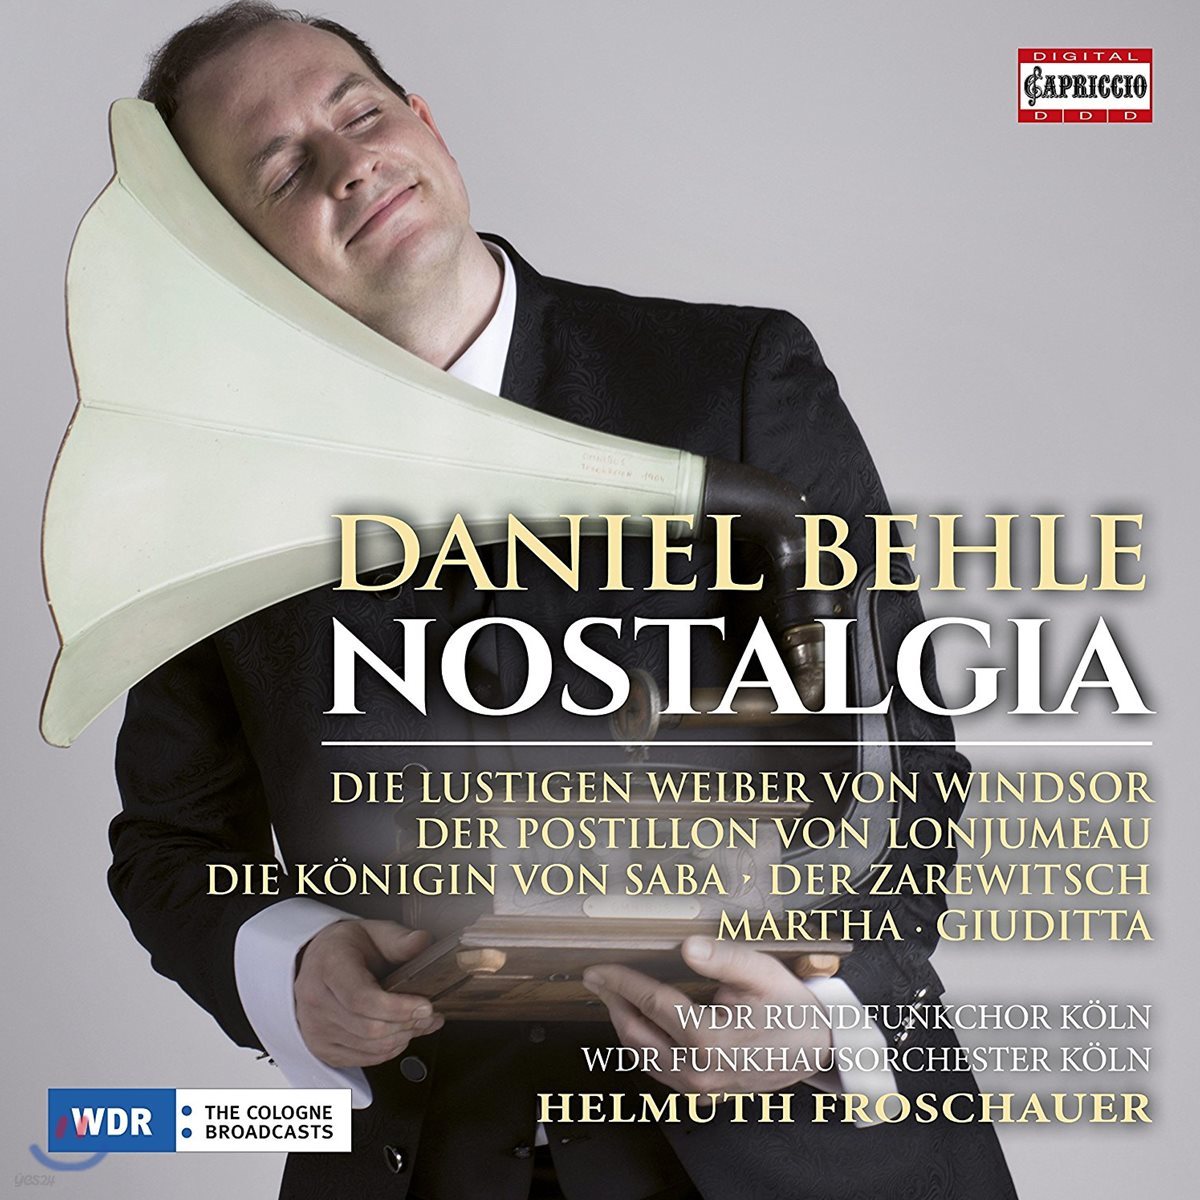 Daniel Behle 노스탈지아 - 19세기의 오페라 아리아 (Nostalgia)